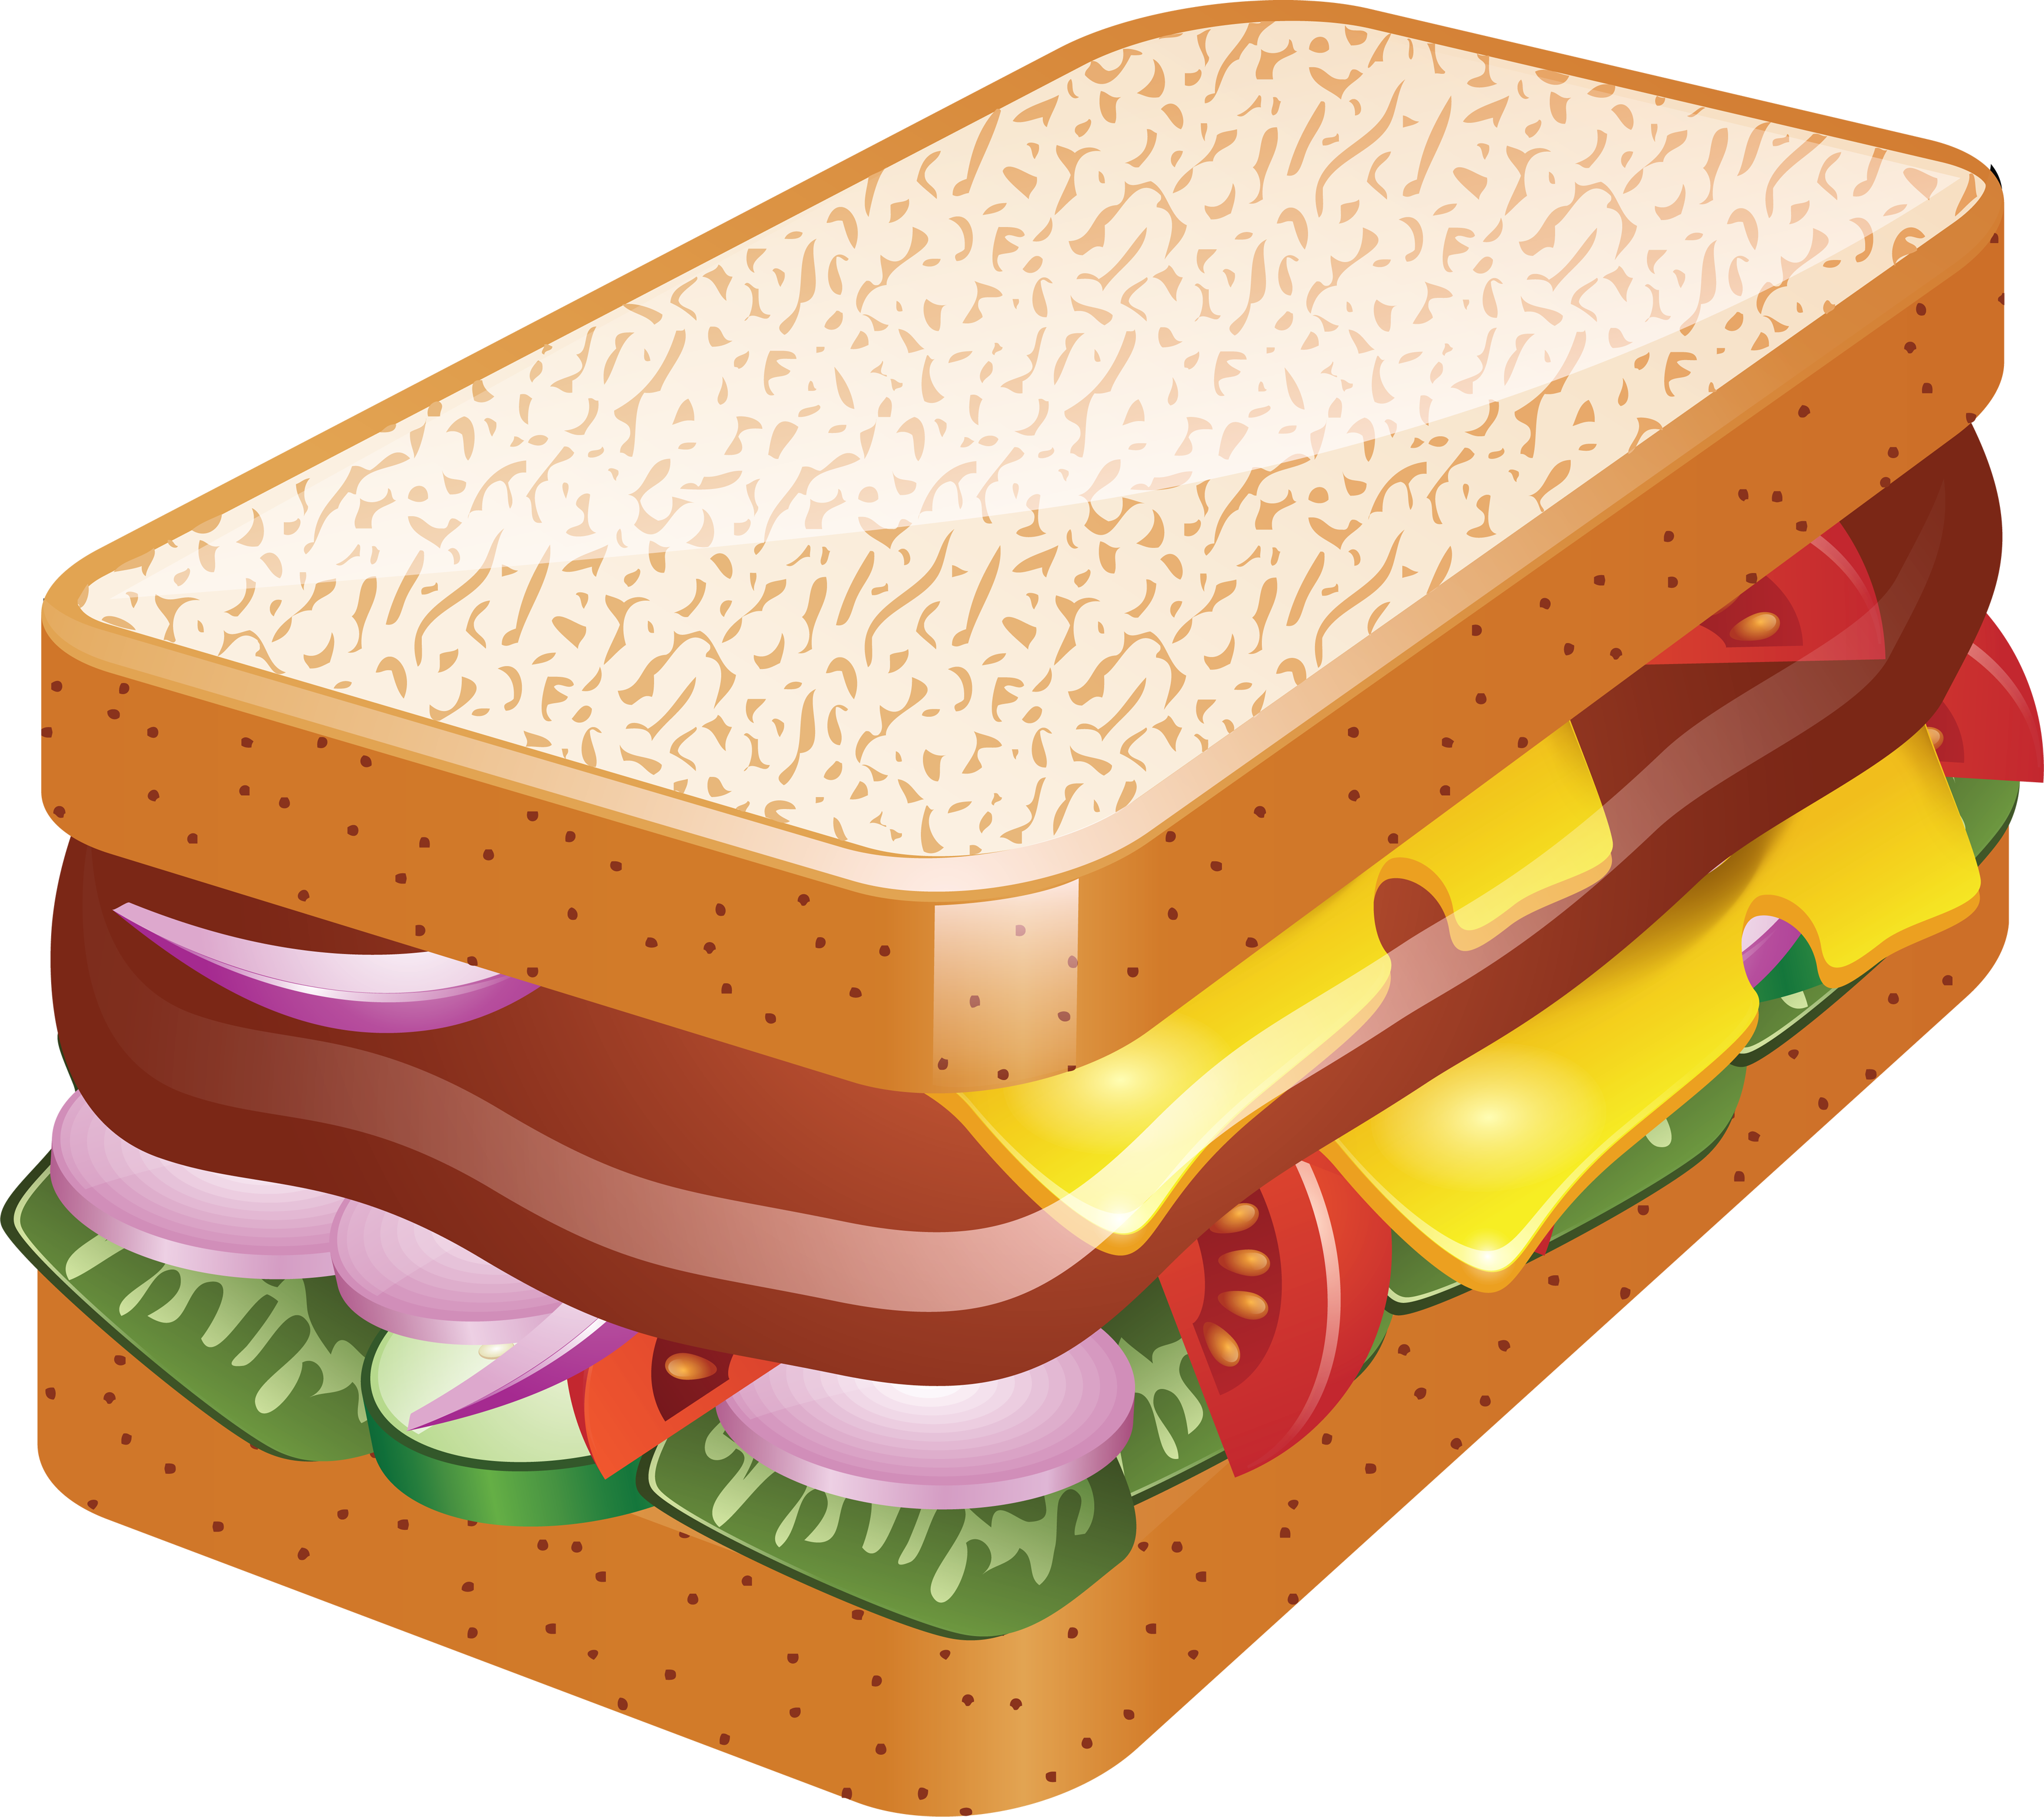 Sandwich Clip Art Free - Free Clipart Images